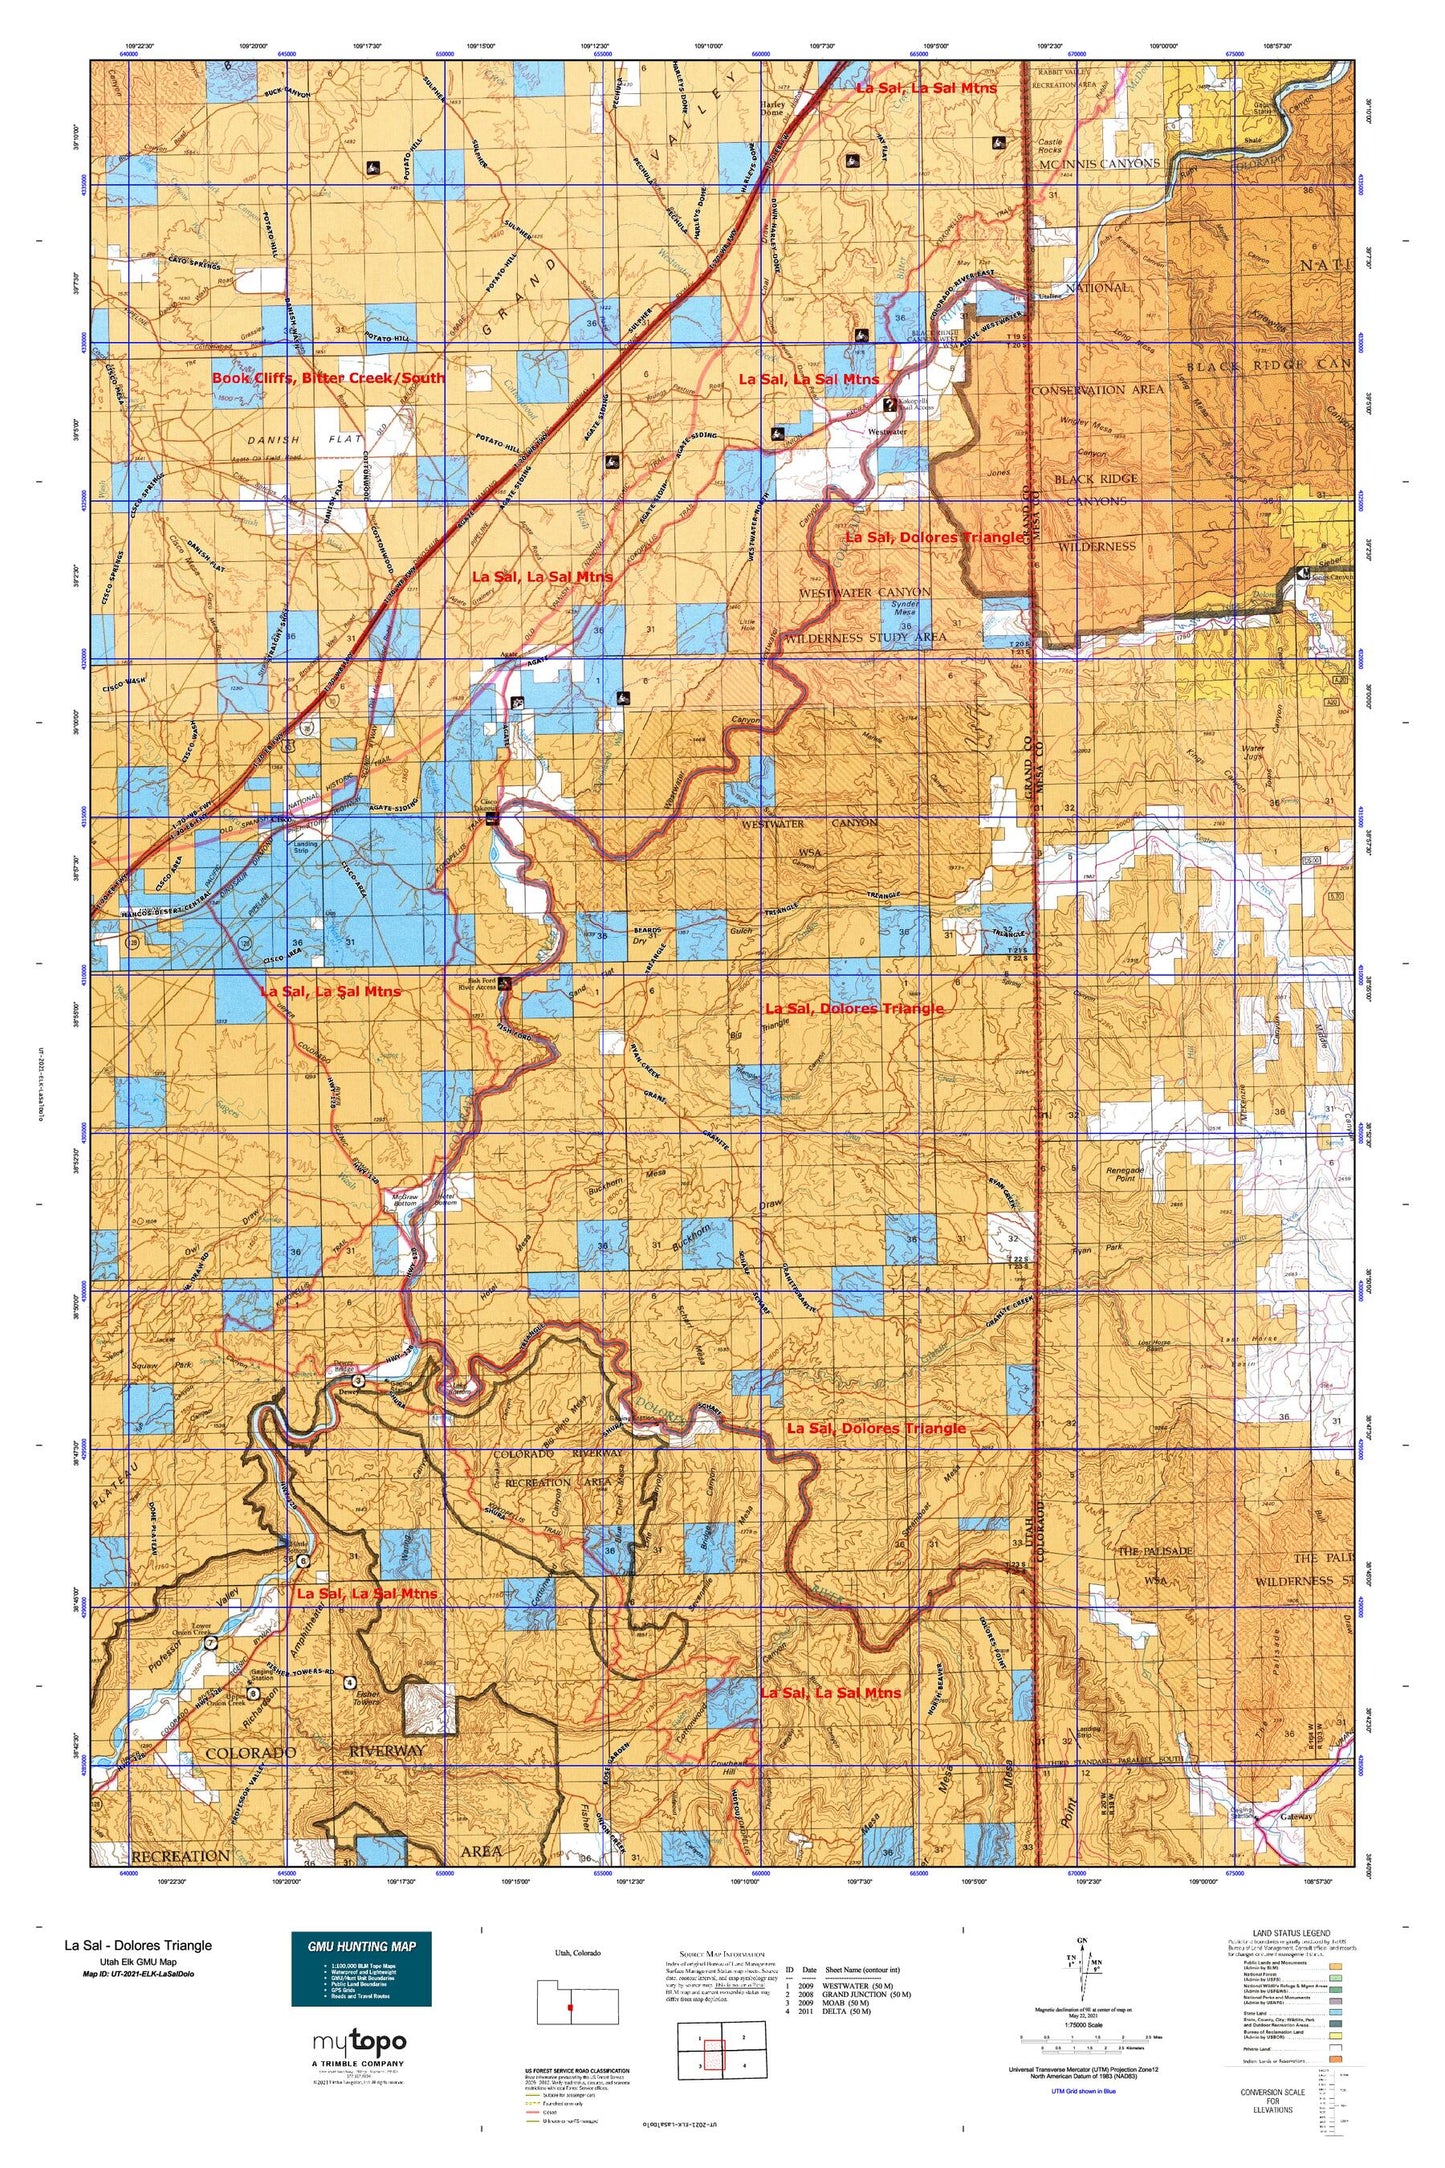 Utah Elk GMU La Sal - Dolores Triangle Map Image